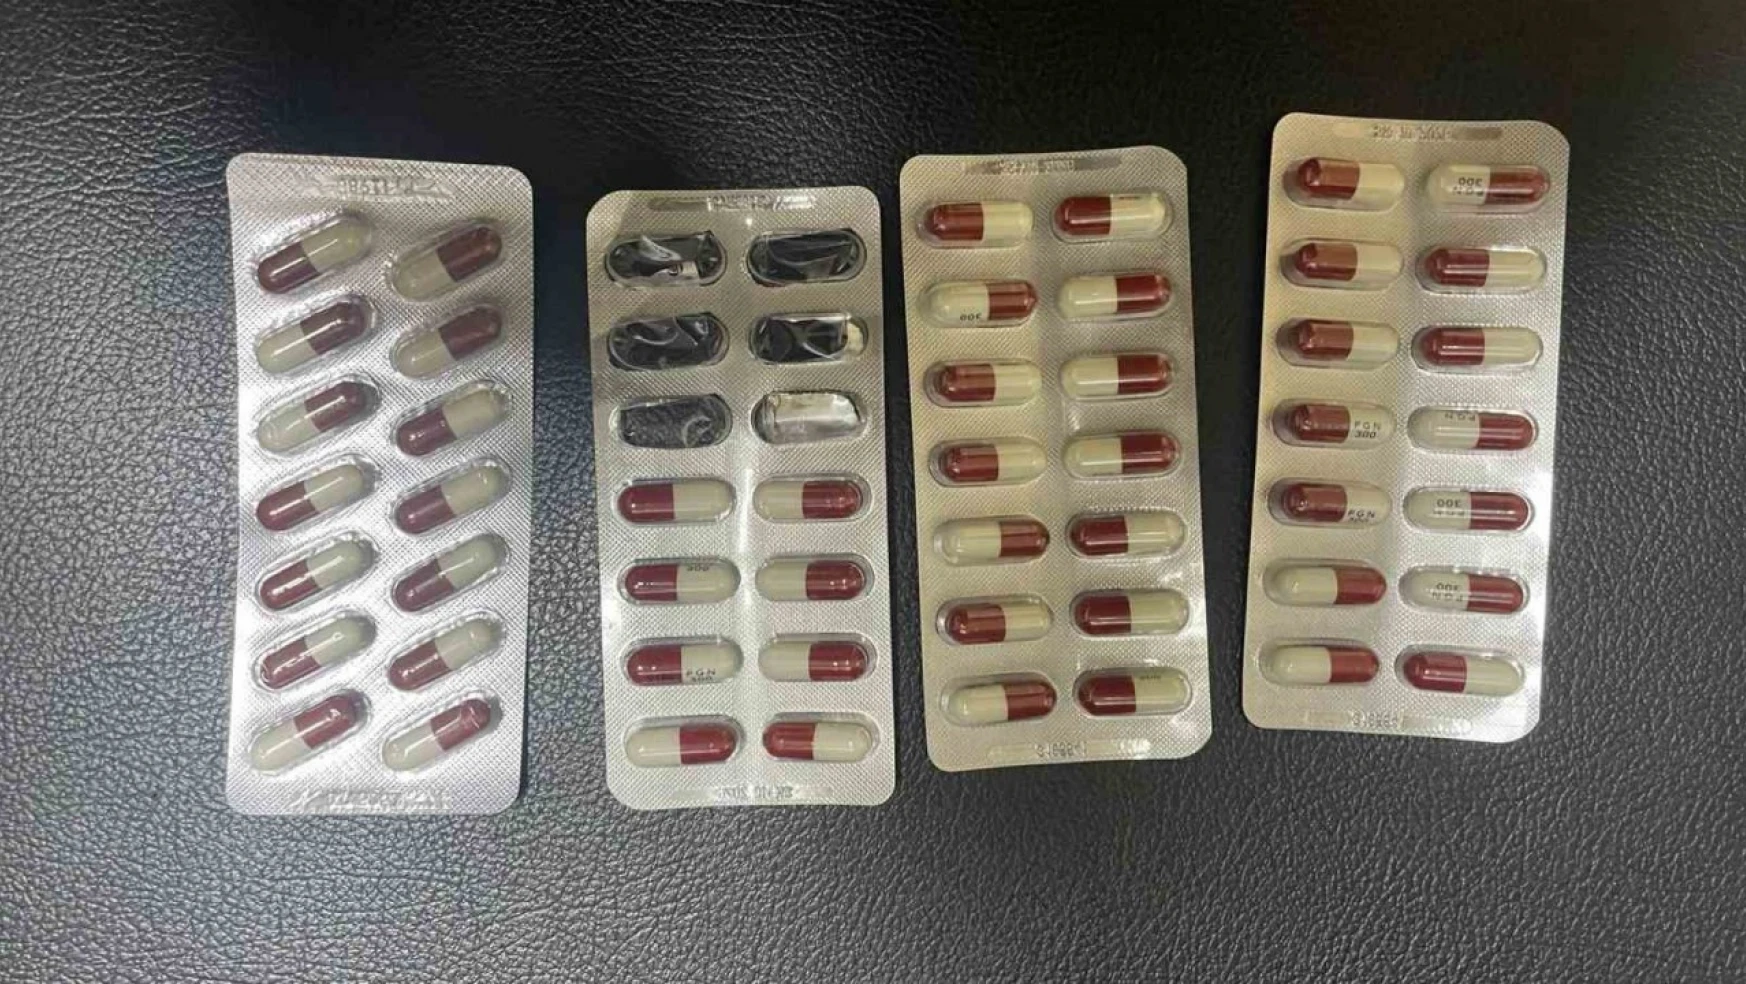 Ankara'da 23 gram metamfetamin ve eroin, 60 adet uyuşturucu hap ele geçirildi